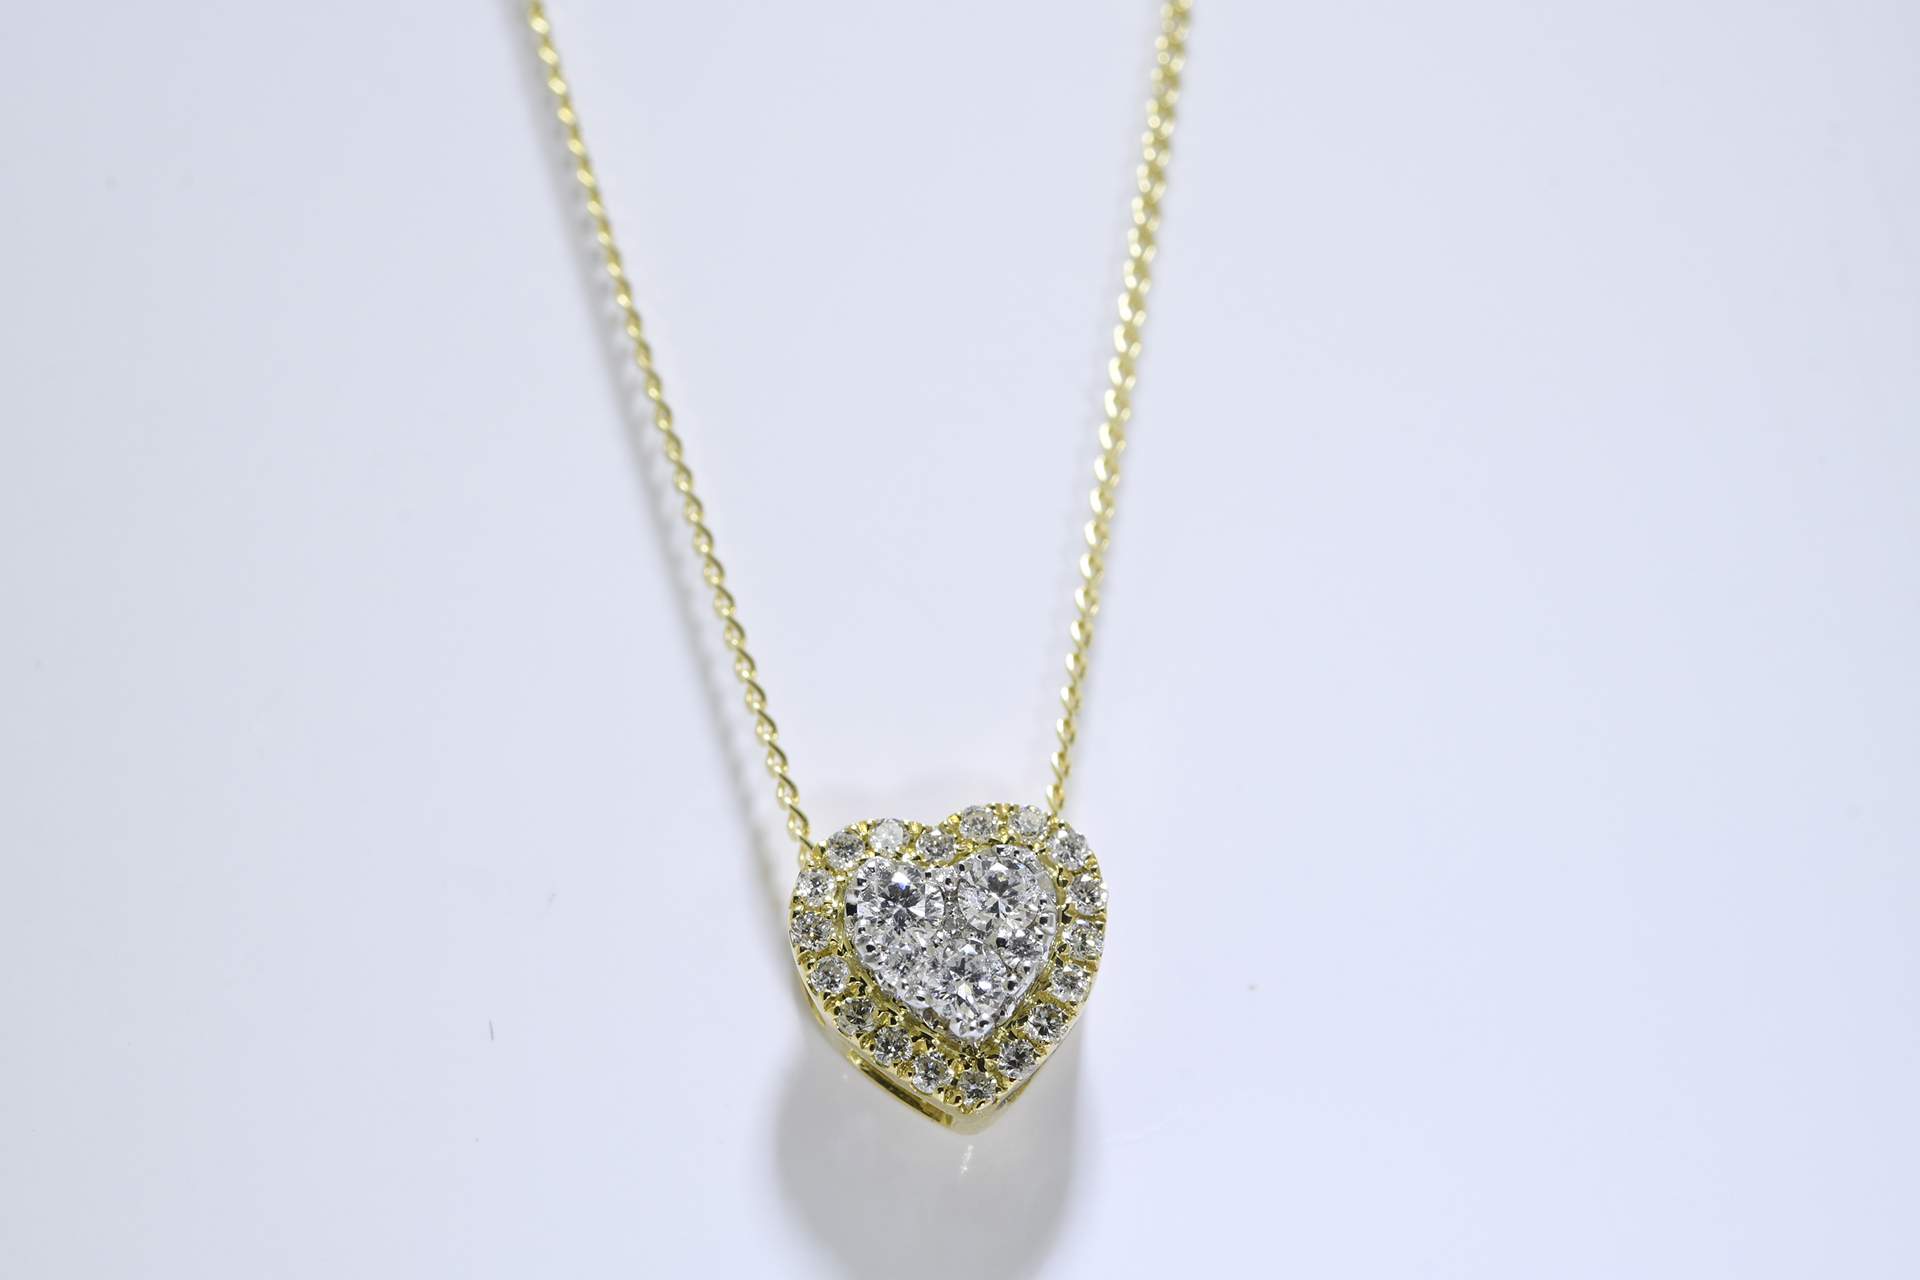 Heart Shaped Diamond Pendant in 18 carat Gold